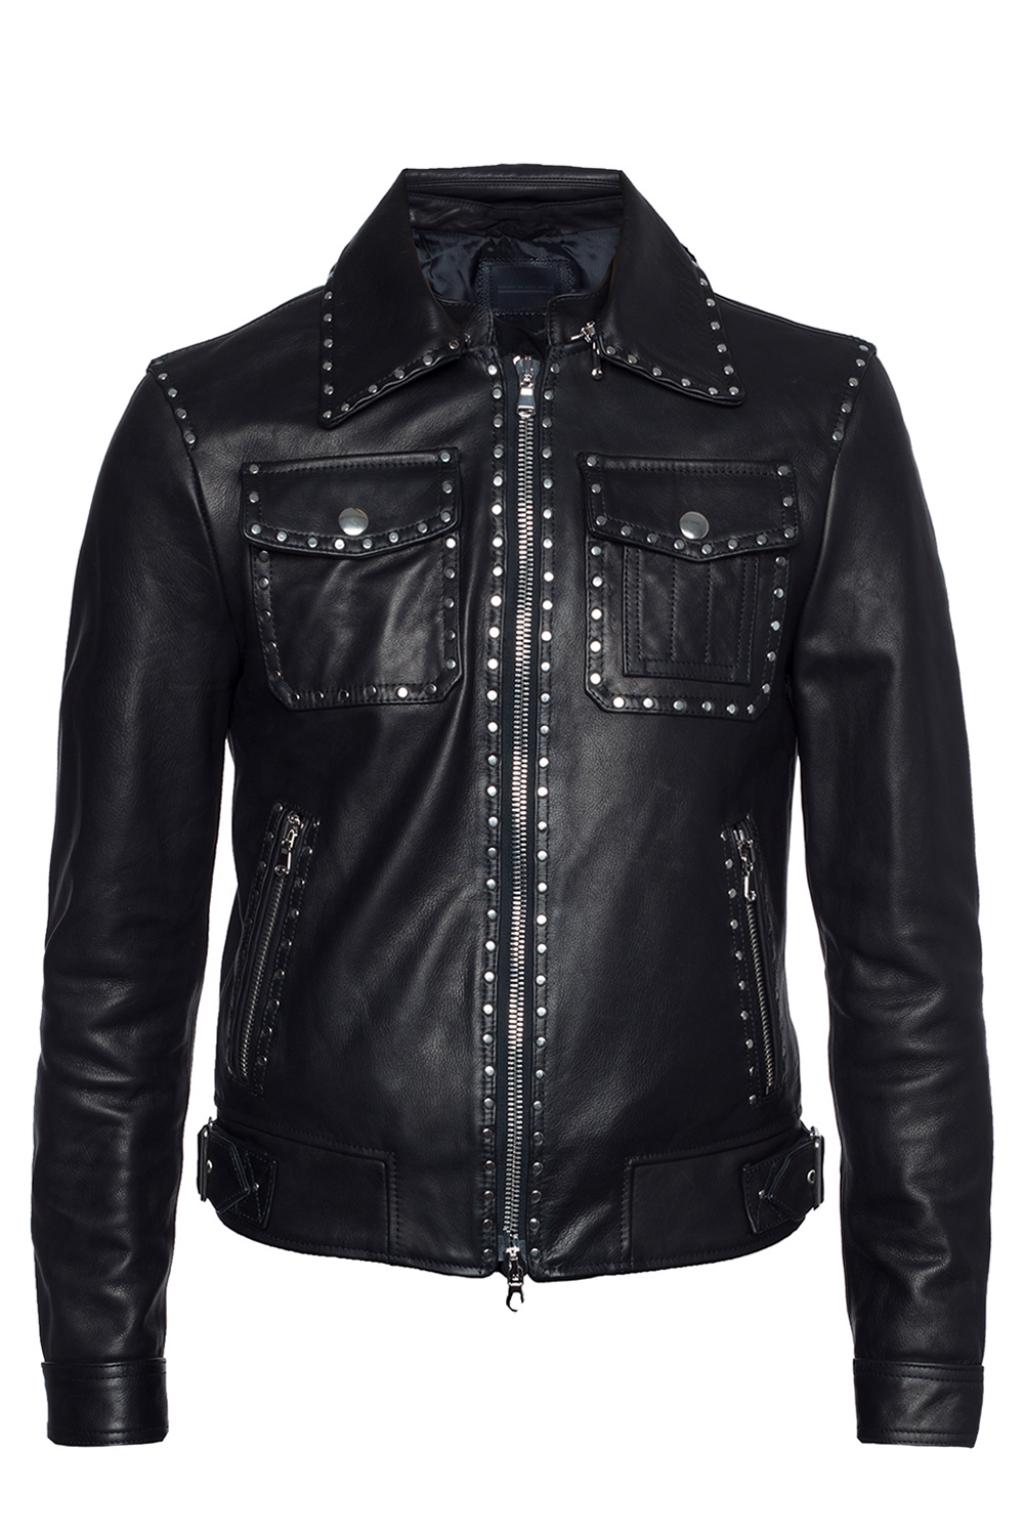 Studded biker jacket Diesel Black Gold - Vitkac GB